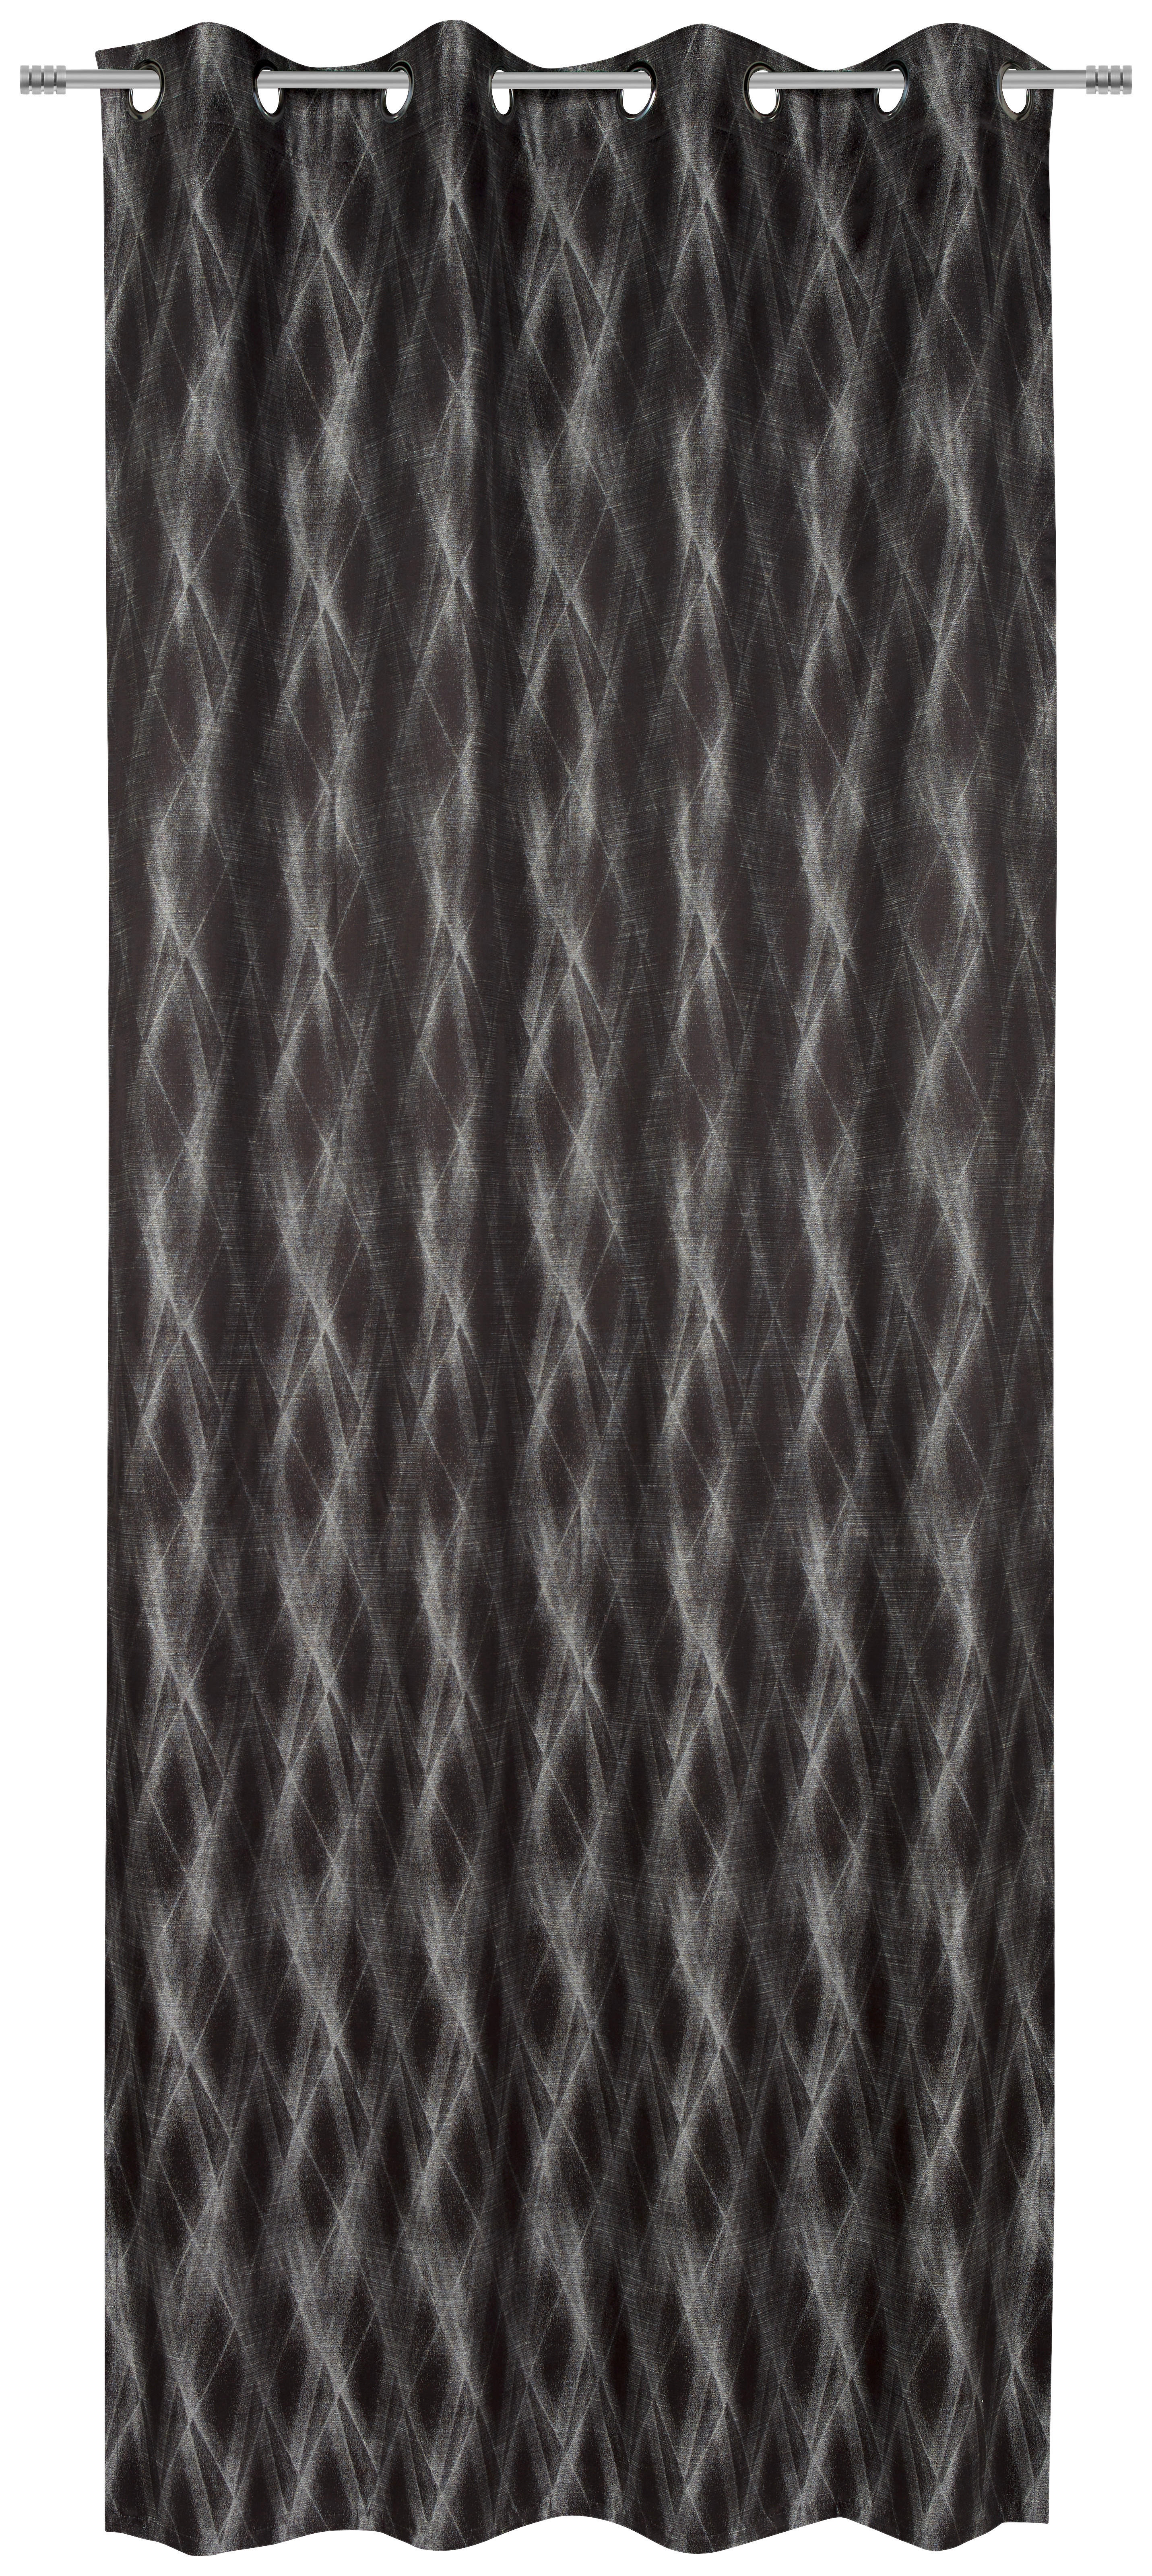 ÖSENSCHAL Narvik blickdicht 135/250 cm   - Schwarz/Grau, Design, Textil (135/250cm) - Ambiente